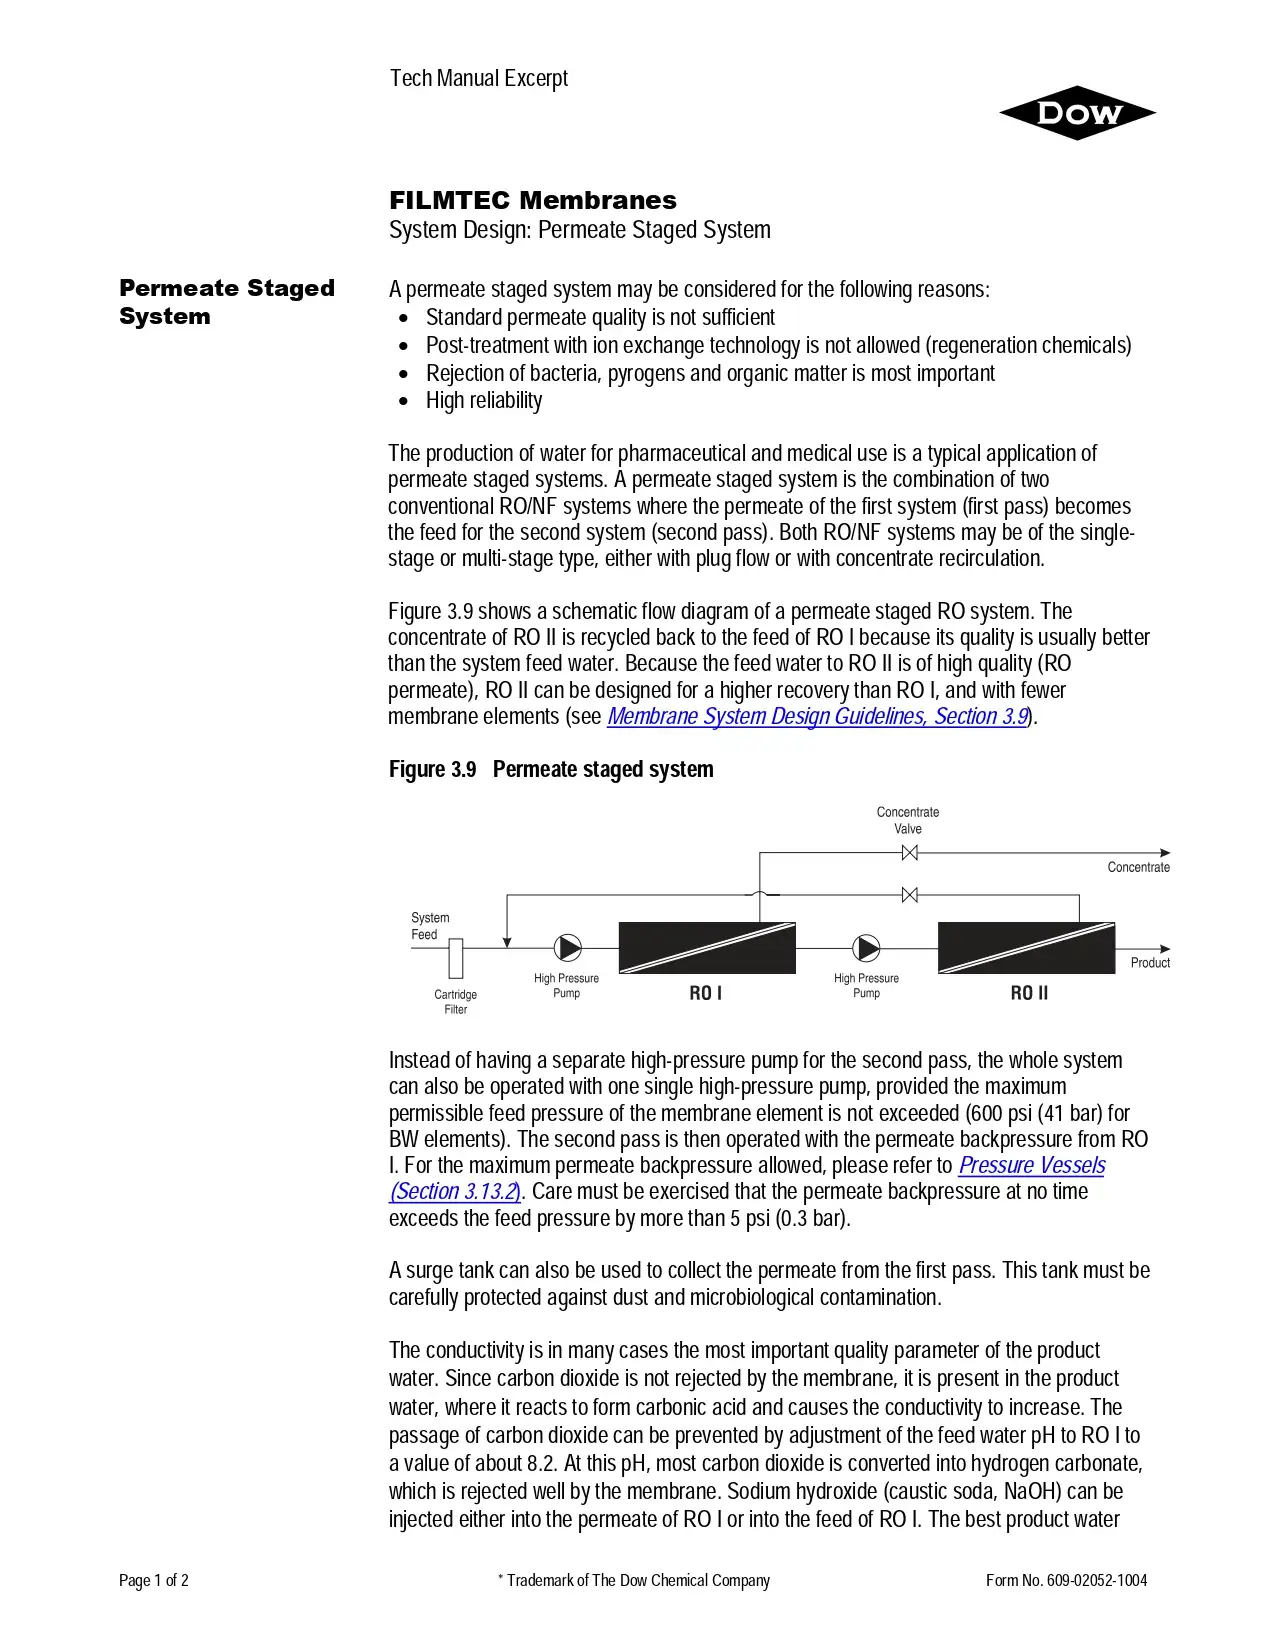 Filmtec Membranes System Design: Permeate Staged System